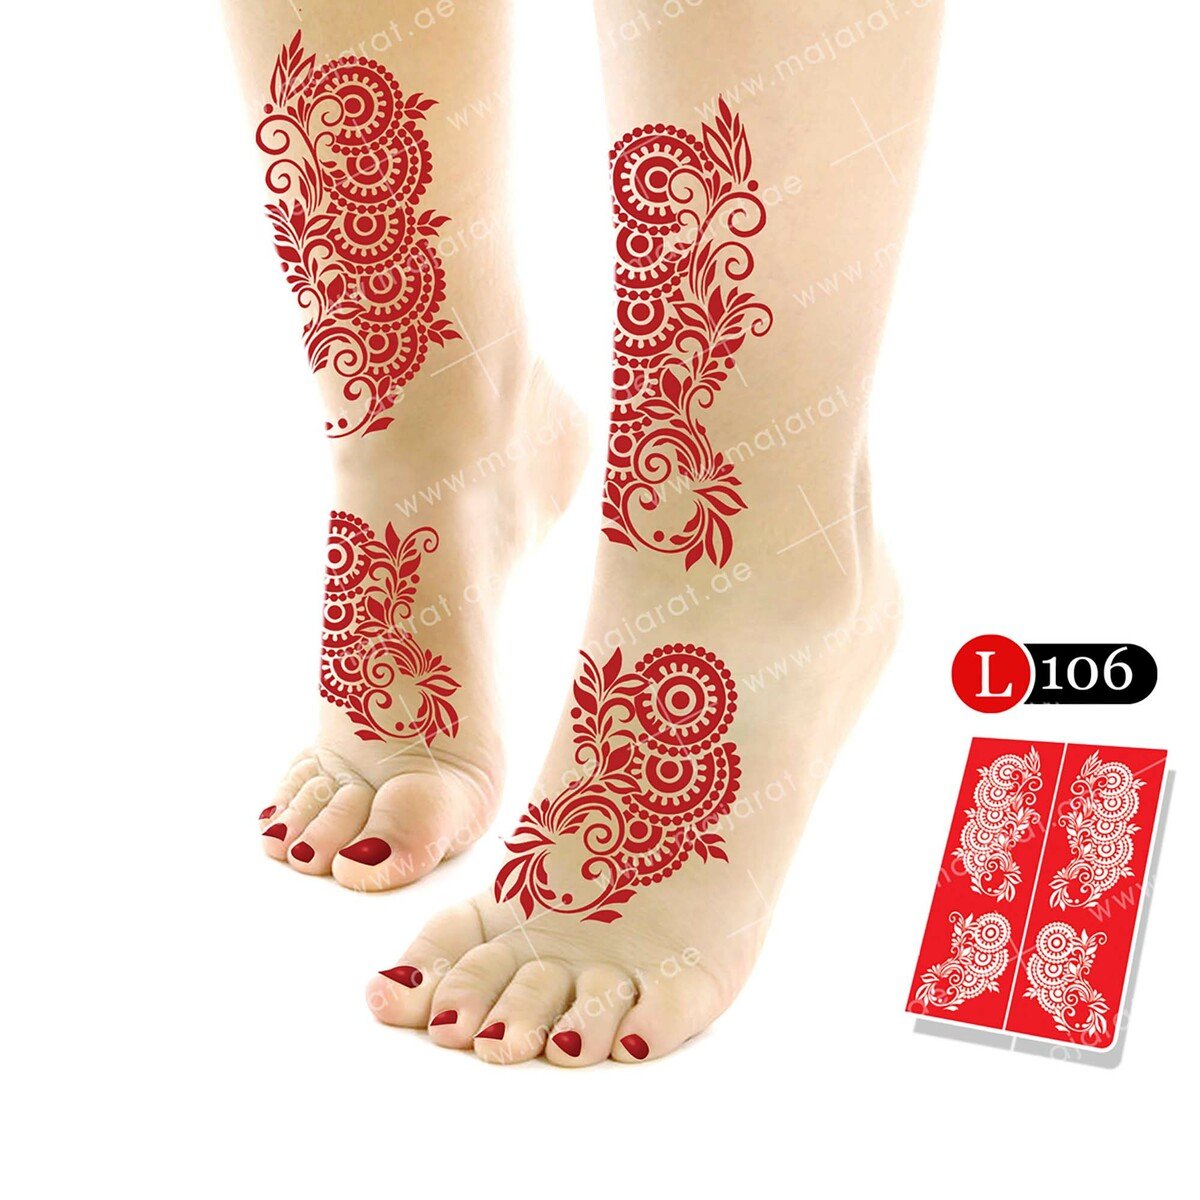 Majarat Henna Design Sticker Large L106 18x25cm